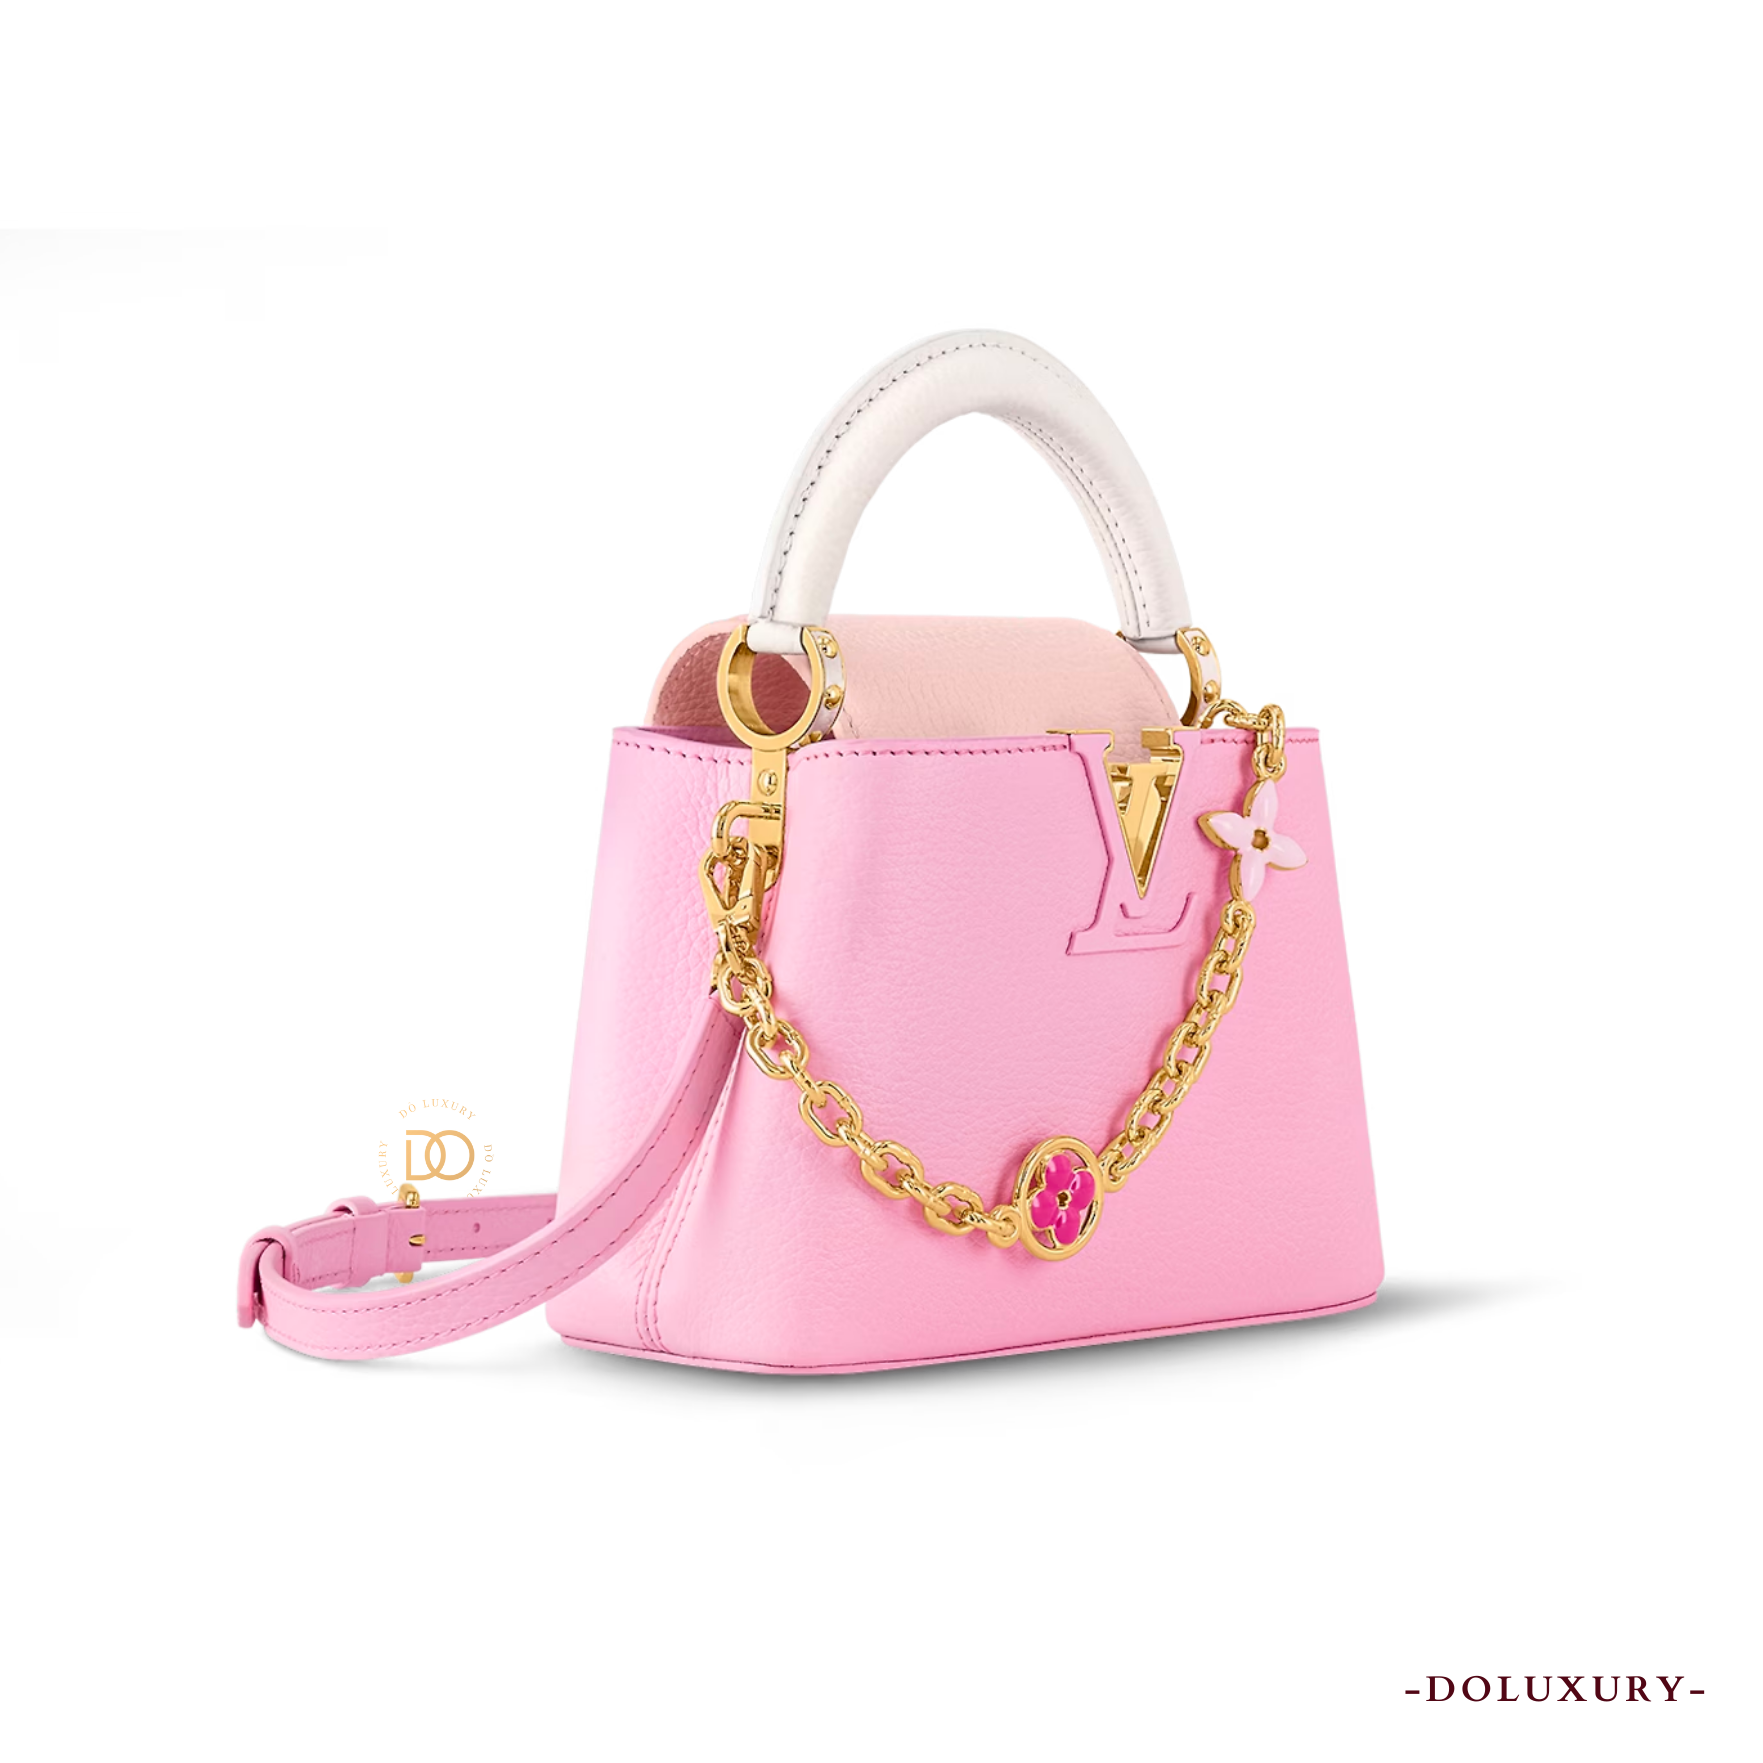 Louis Vuitton Capucines Bag Size Comparison BB PM  MM  What Fits Inside   Handbagholic  YouTube